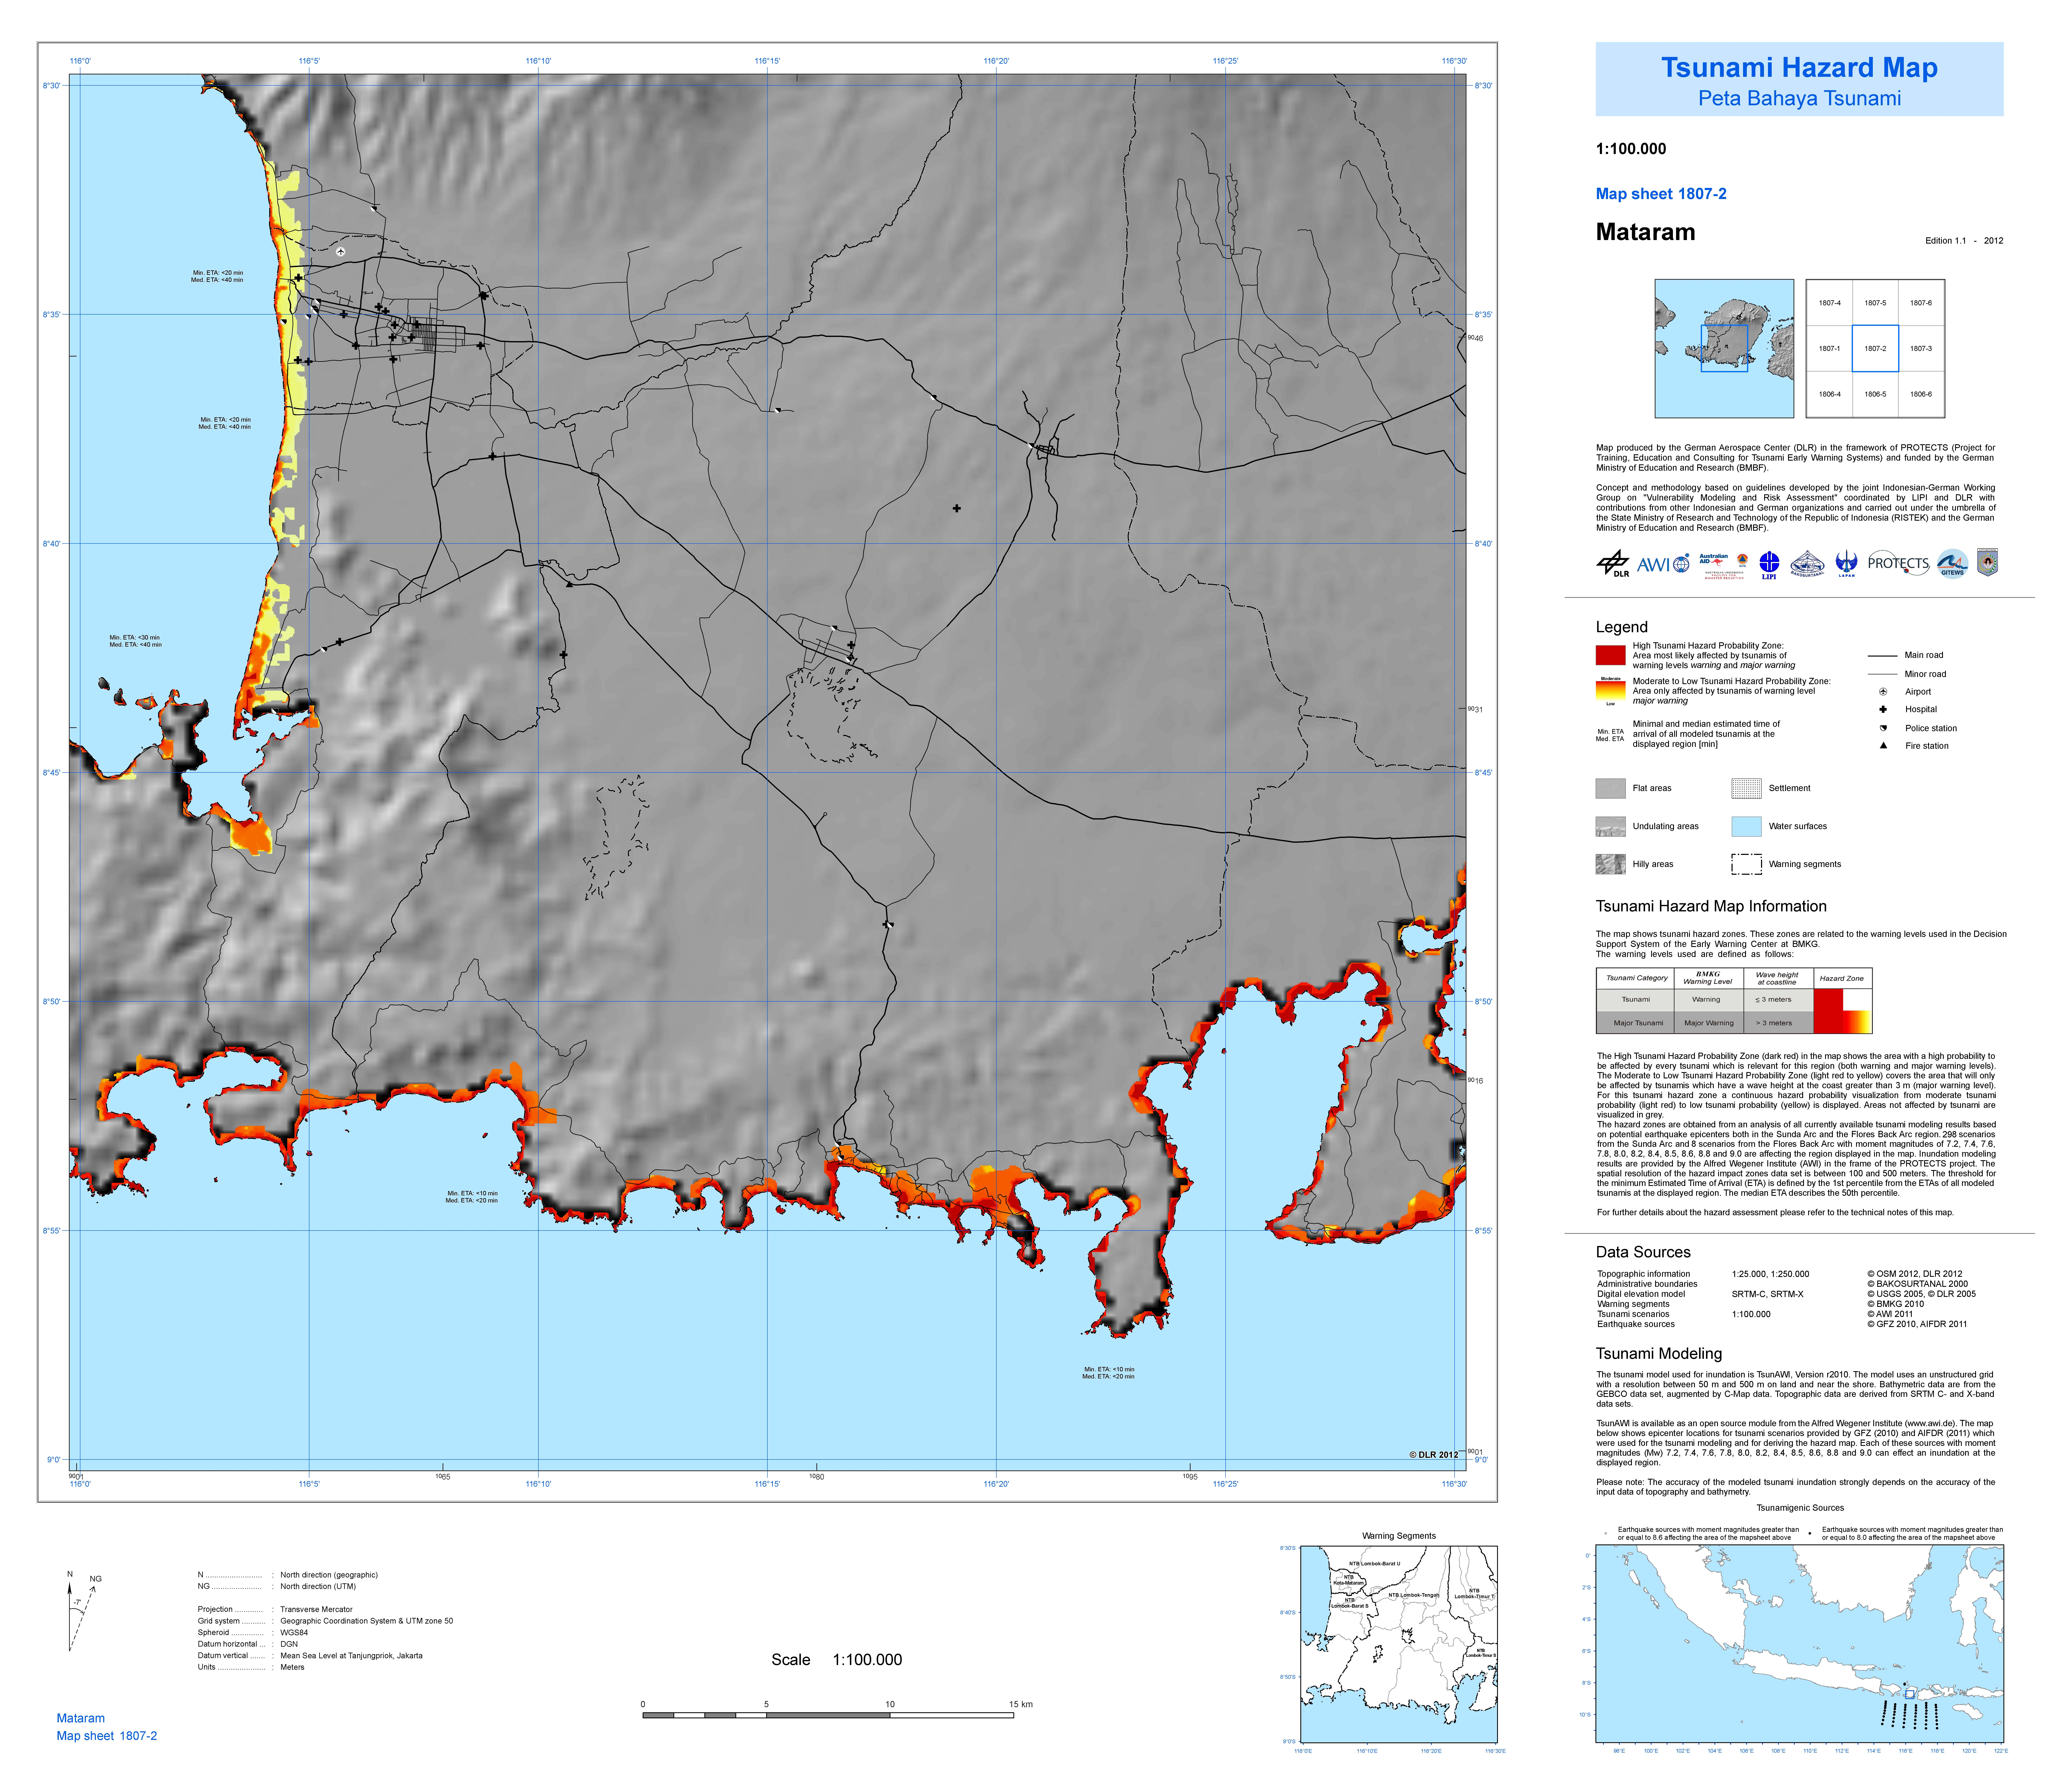 Tsunami Kit - Peta Bahaya Tsunami Lombok